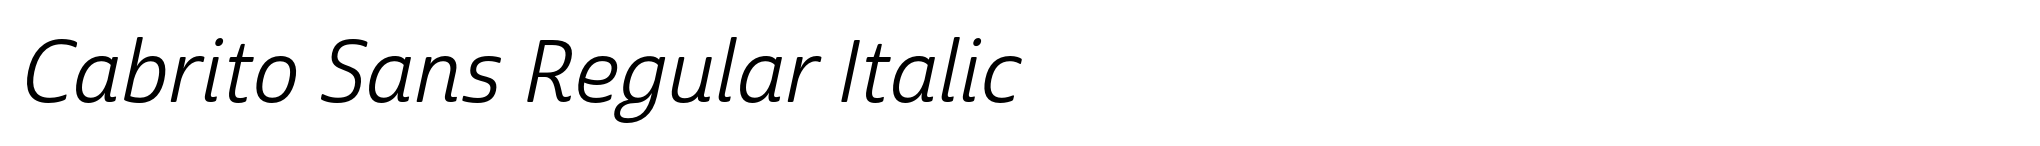 Cabrito Sans Regular Italic image